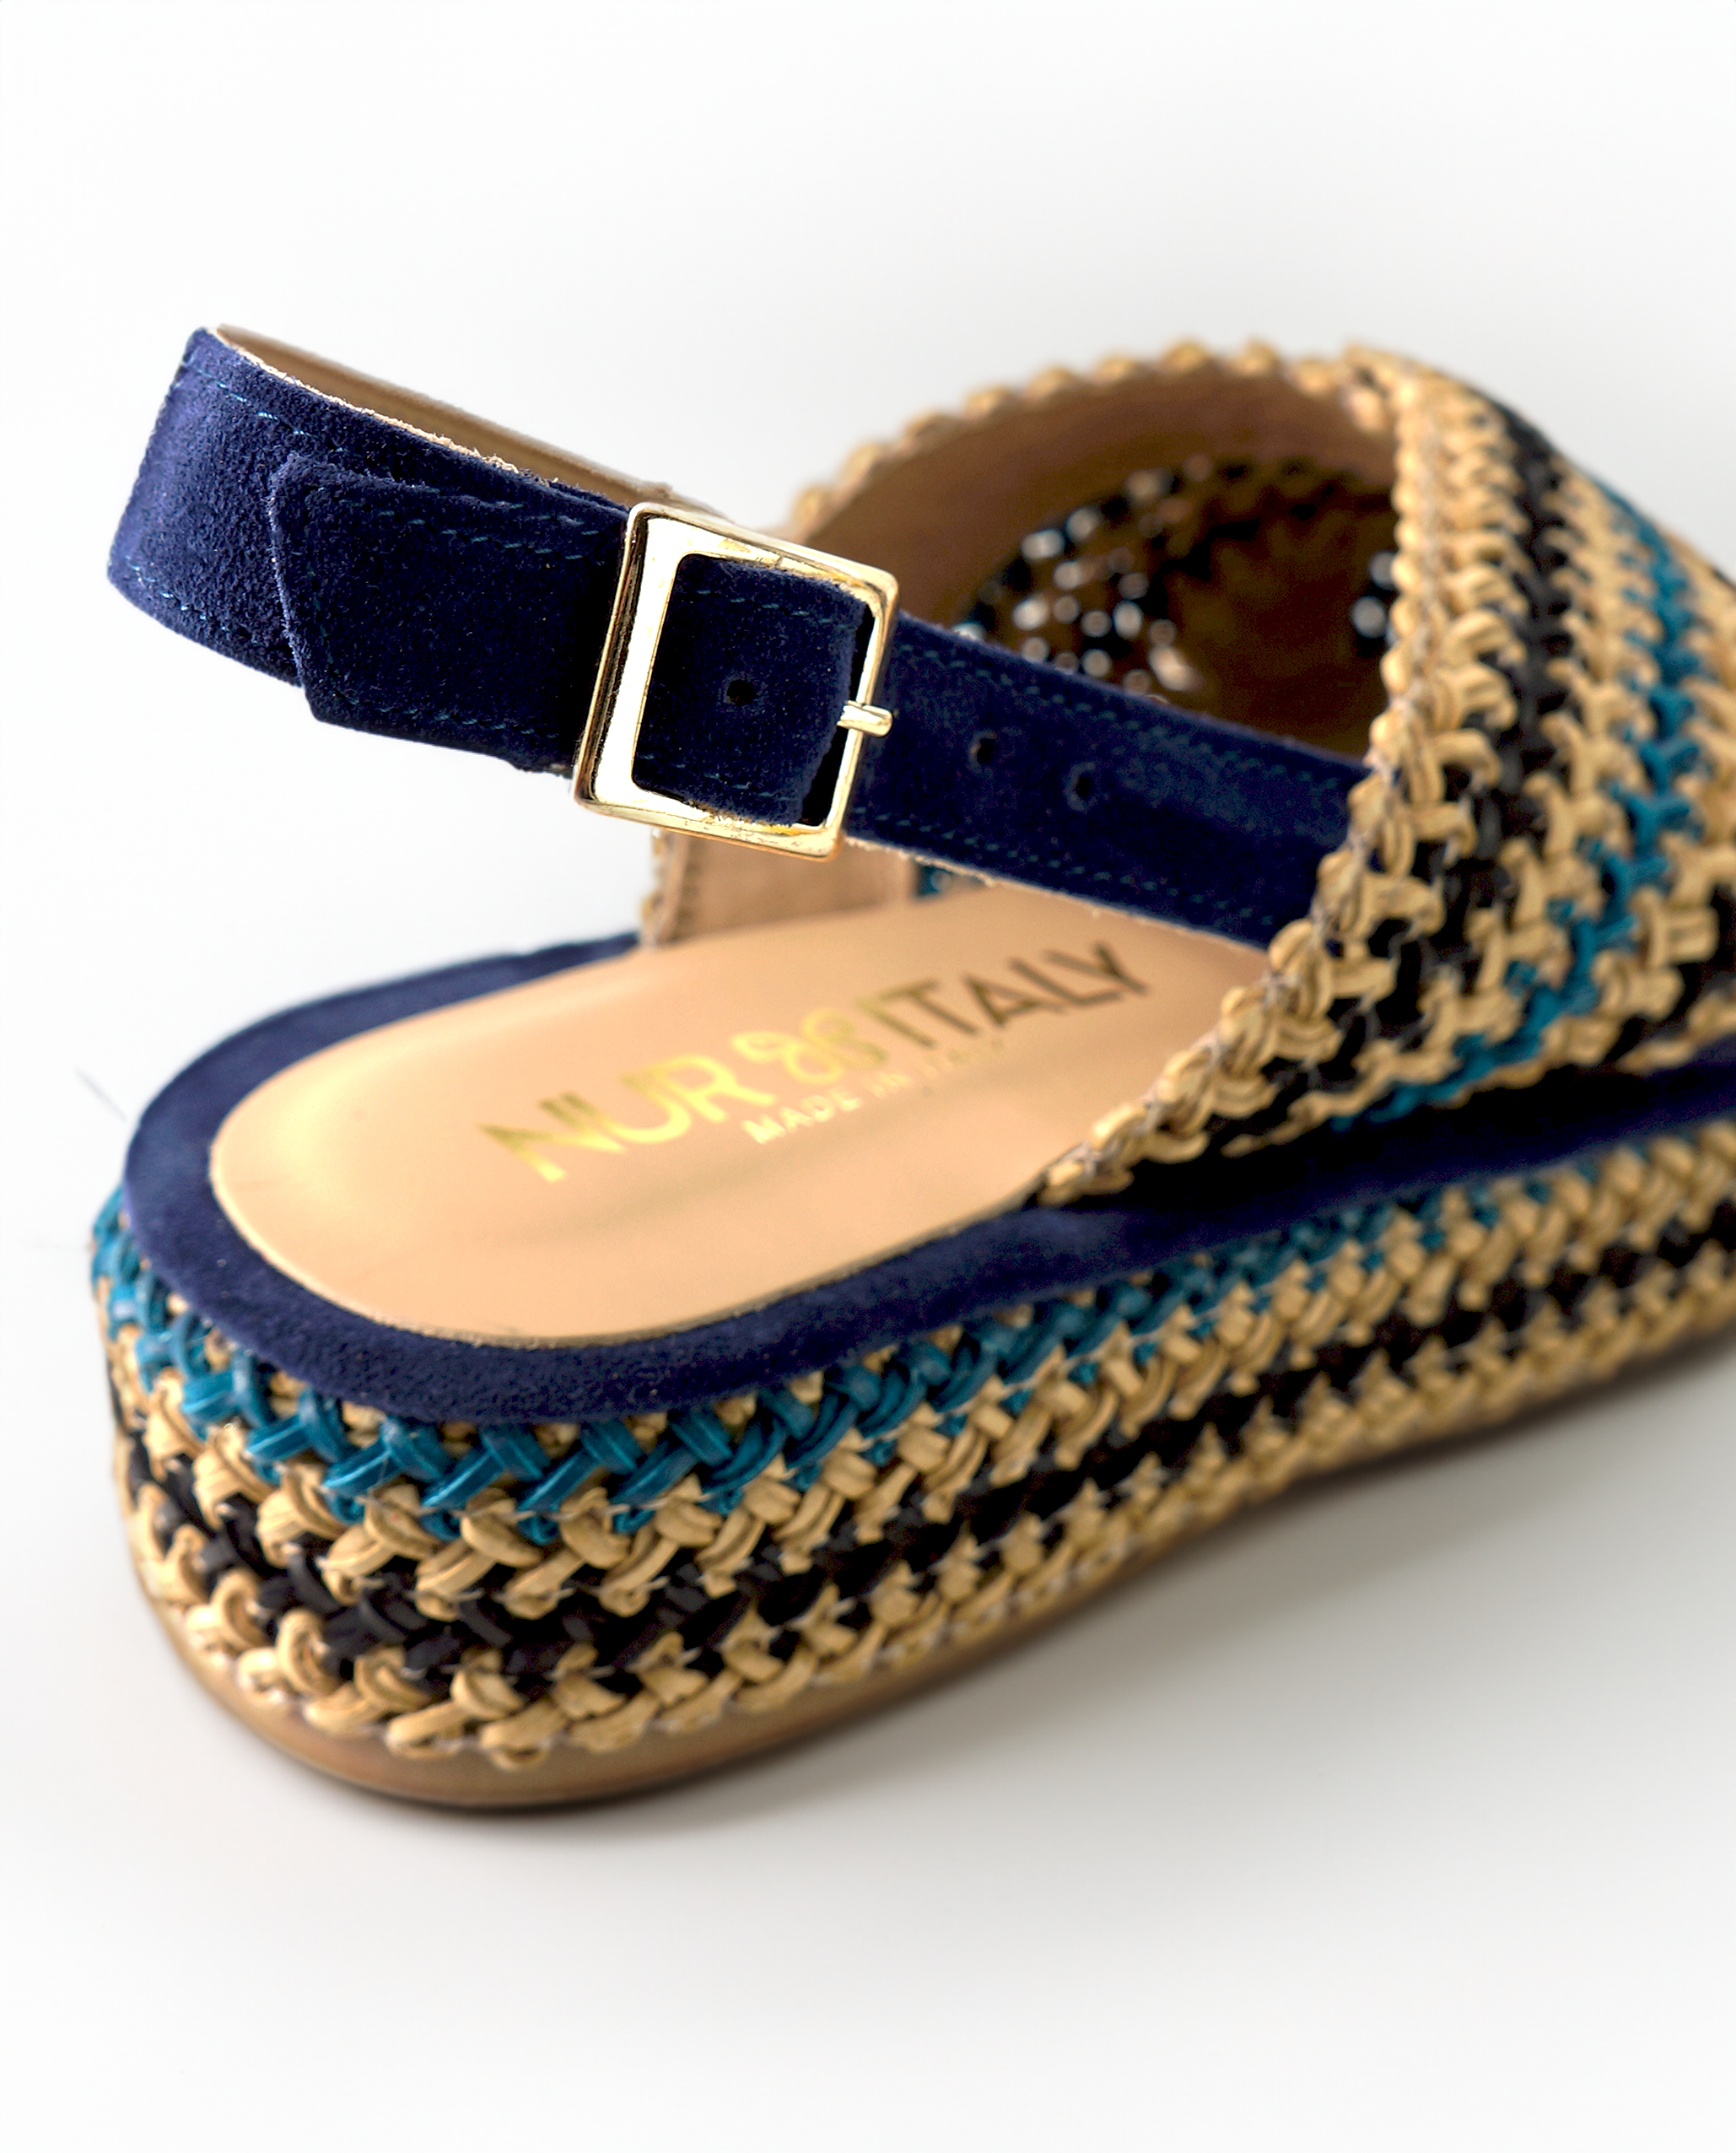 NUR ITALY Raffia flatform sandal, Main, colors, NAVY, NATURAL, CYAN